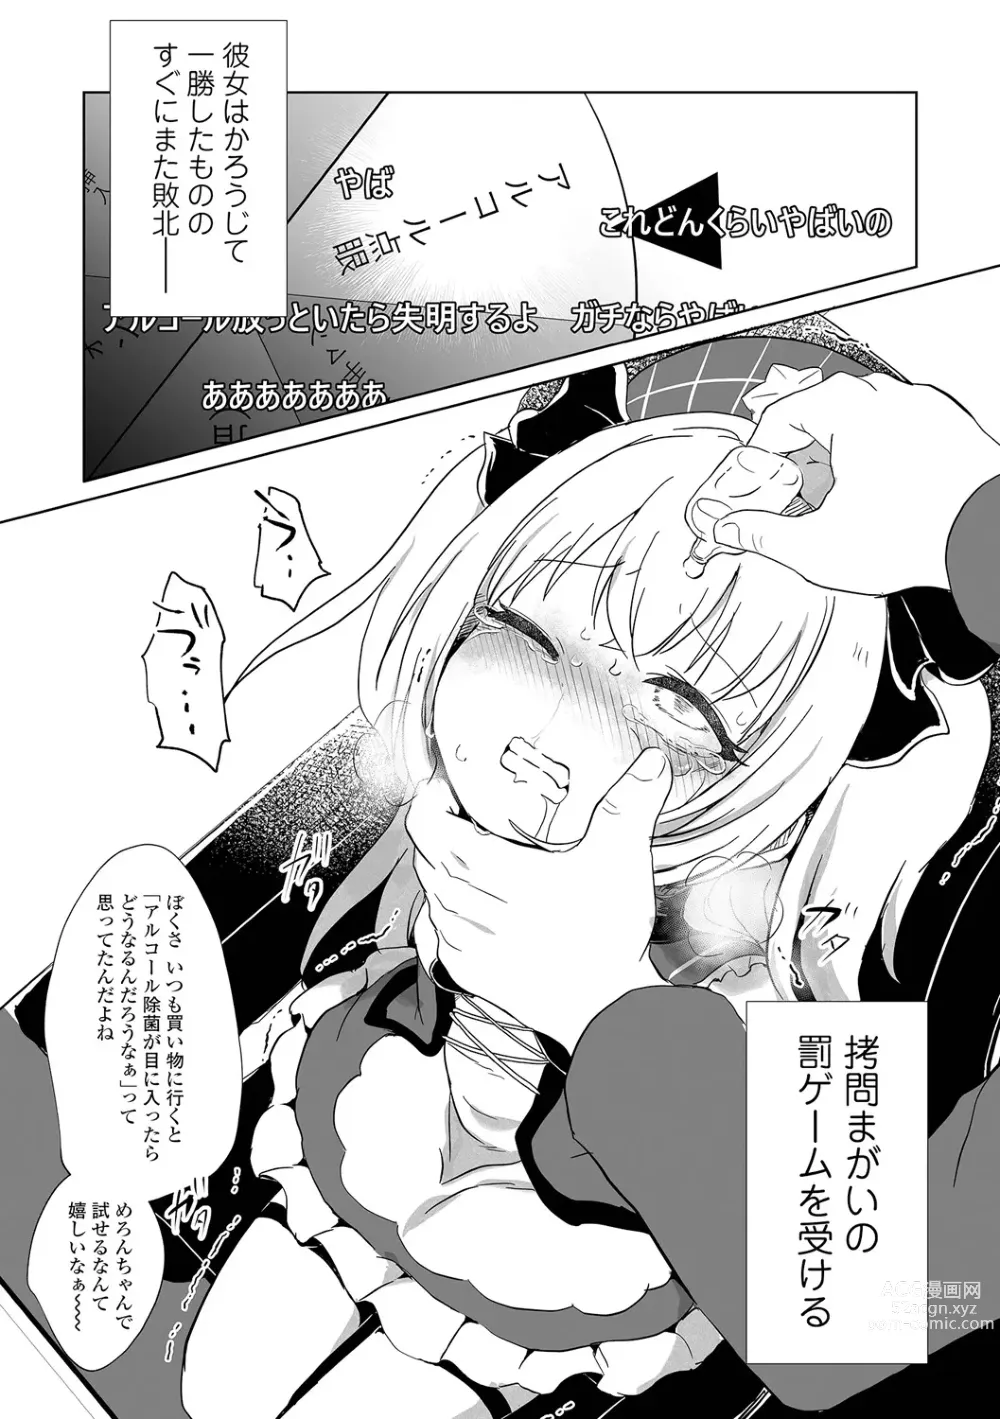 Page 28 of manga Ryona King Vol.28